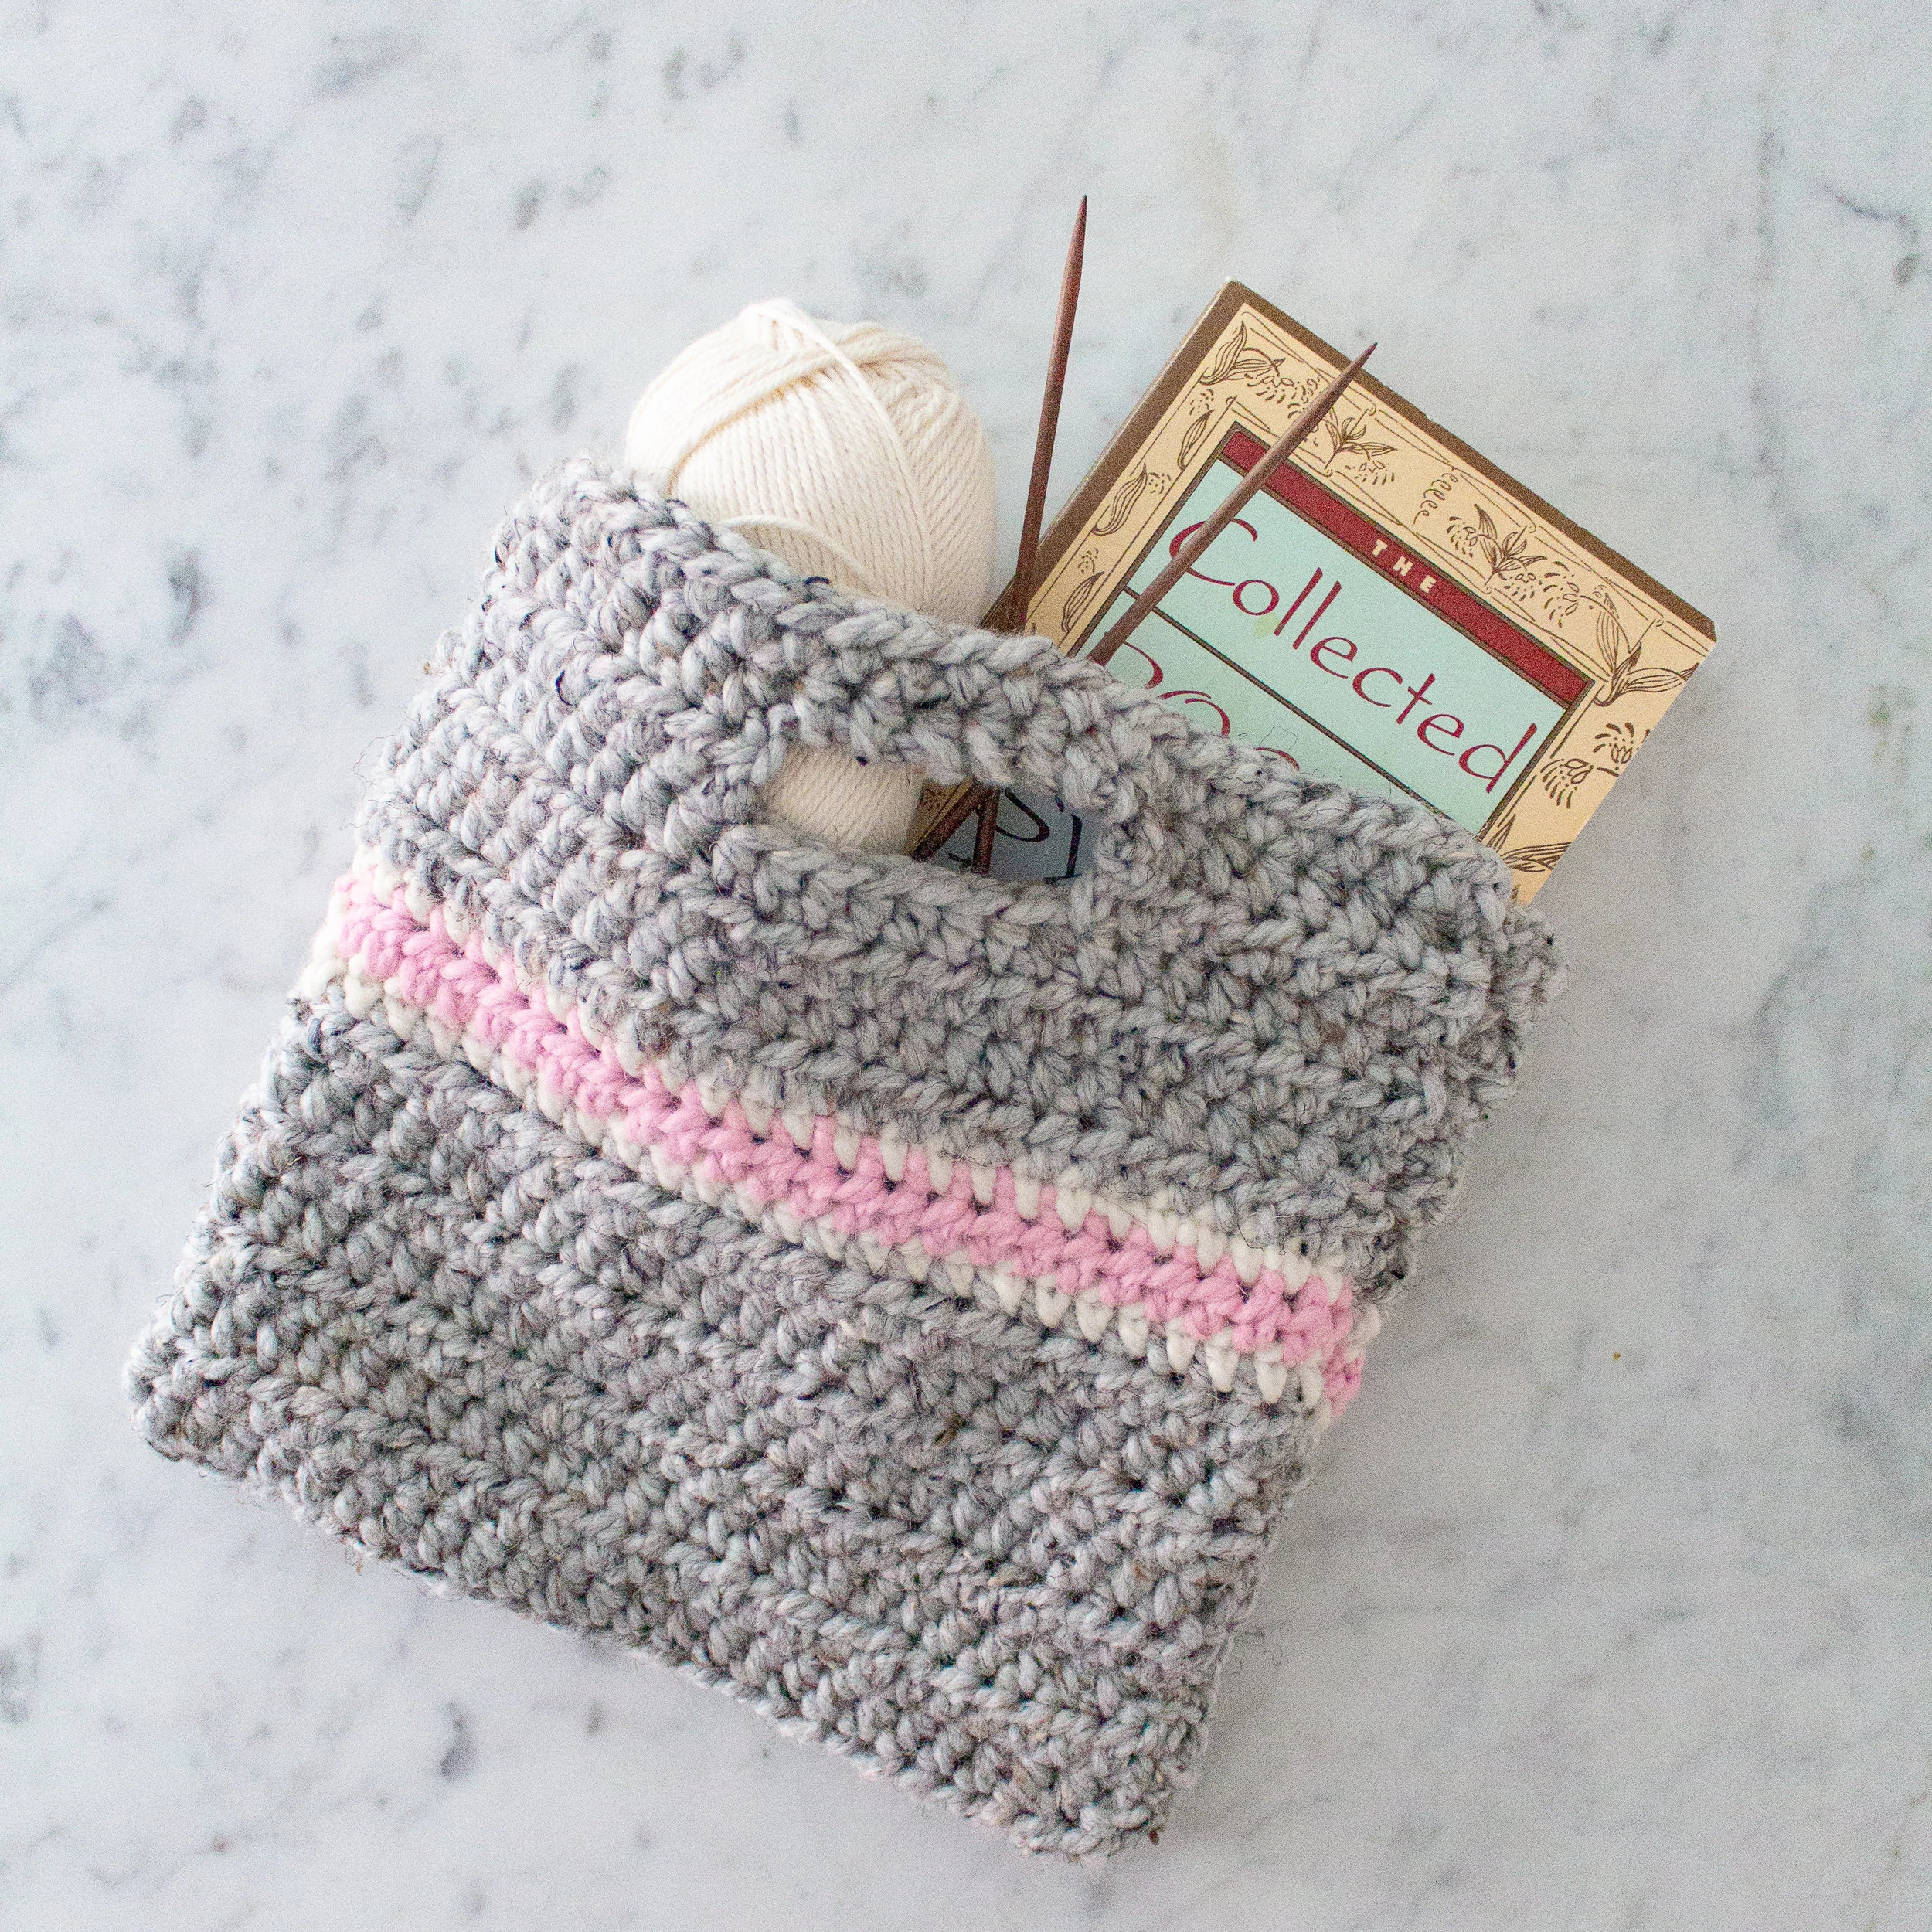 10 Free Crochet Tote Bag Patterns • Oombawka Design Crochet